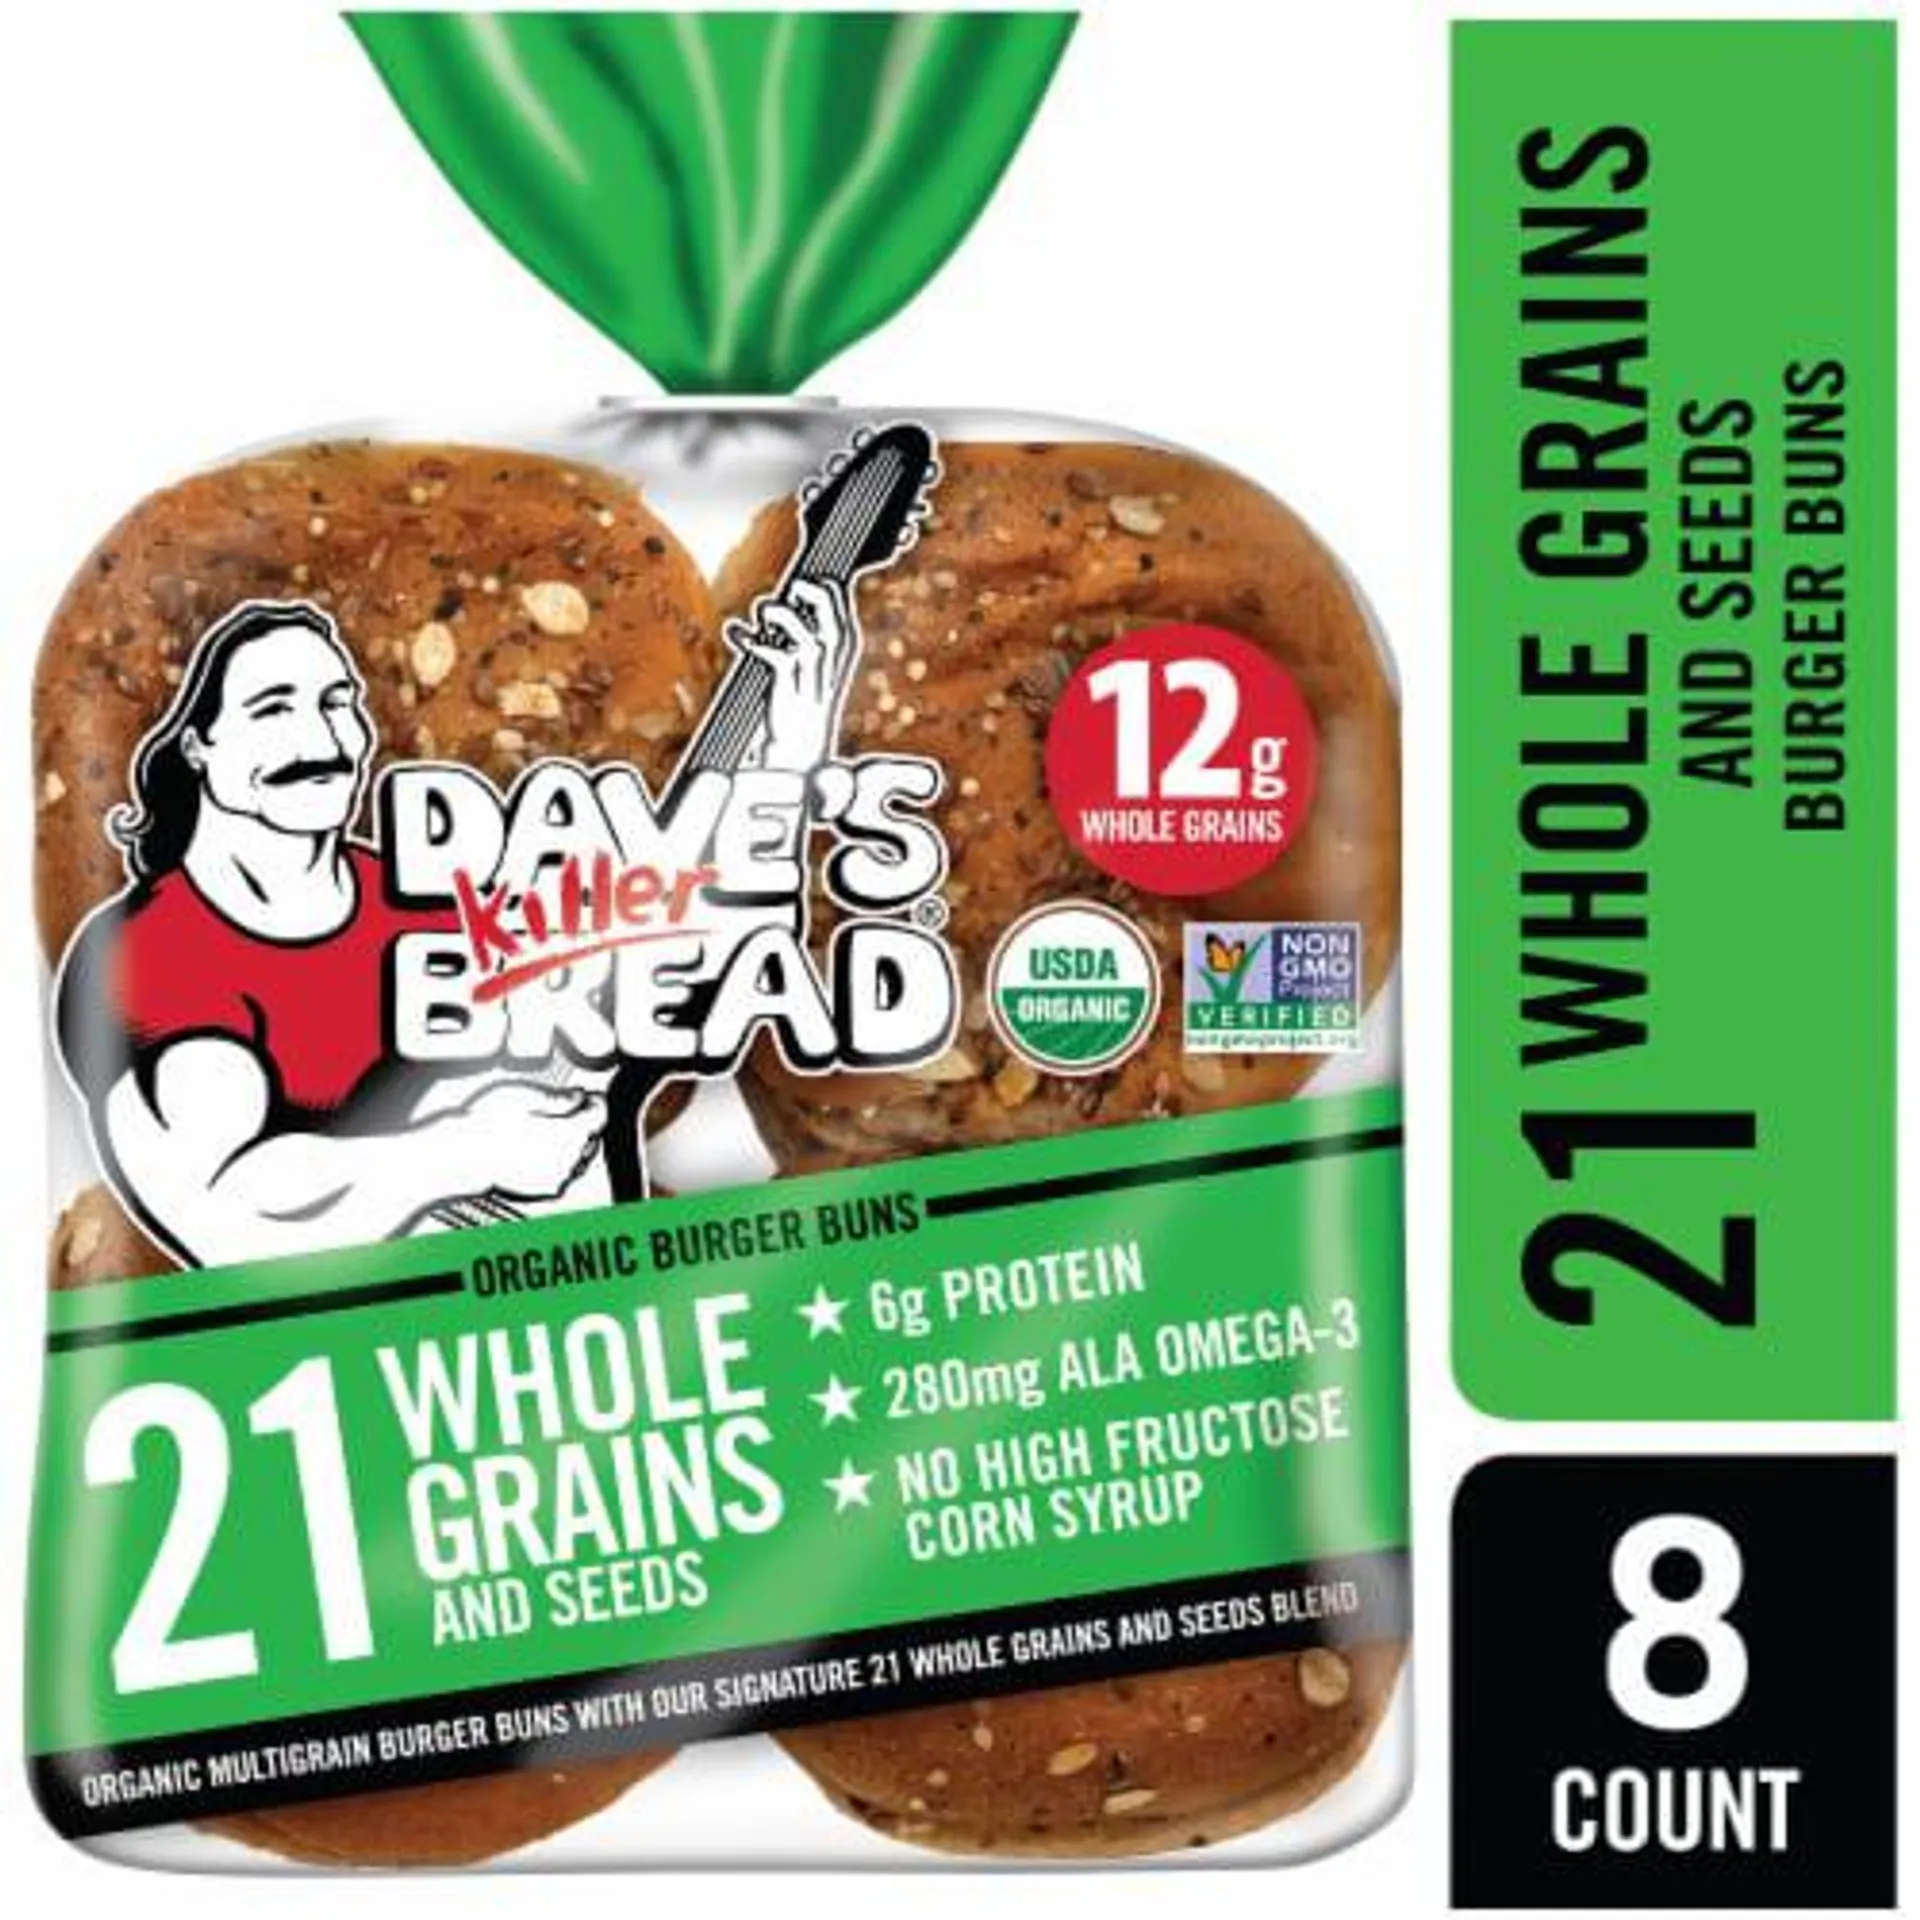 Dave's Killer Bread 21 Whole Grains & Seeds Organic Hamburger Buns